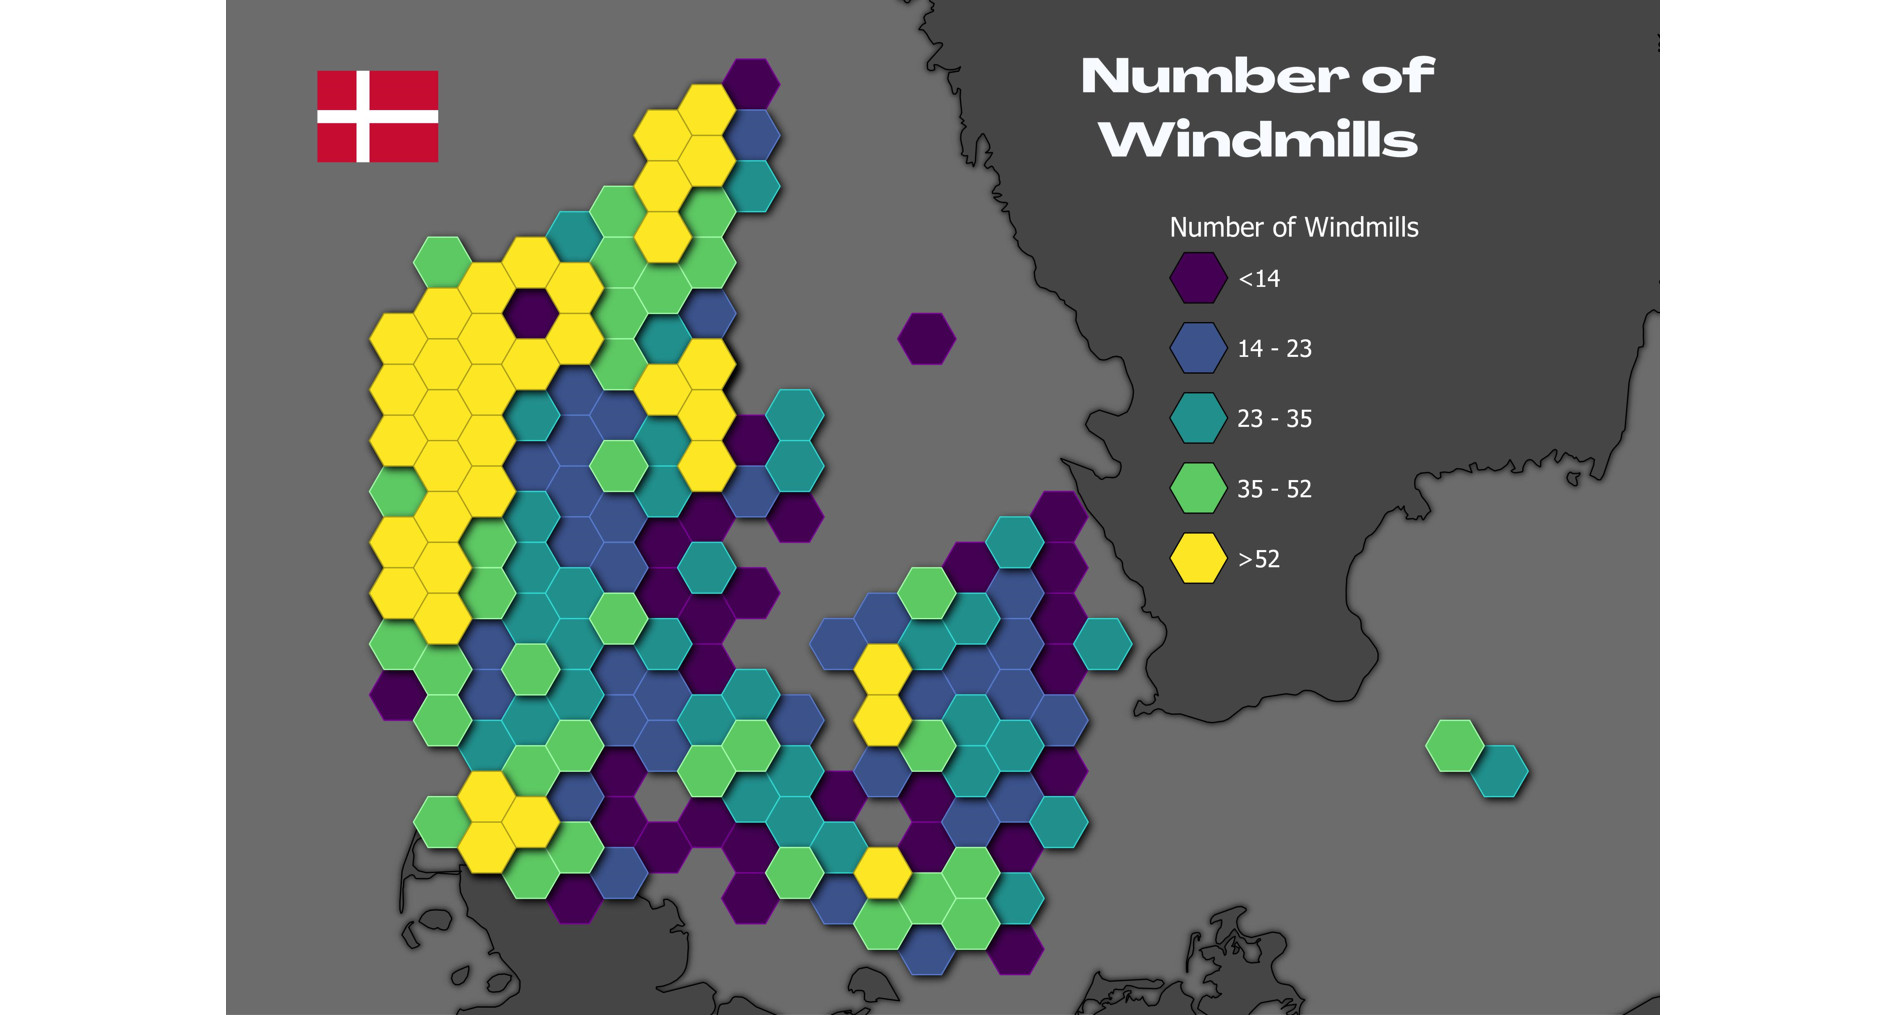 Number of windmills in Denmark